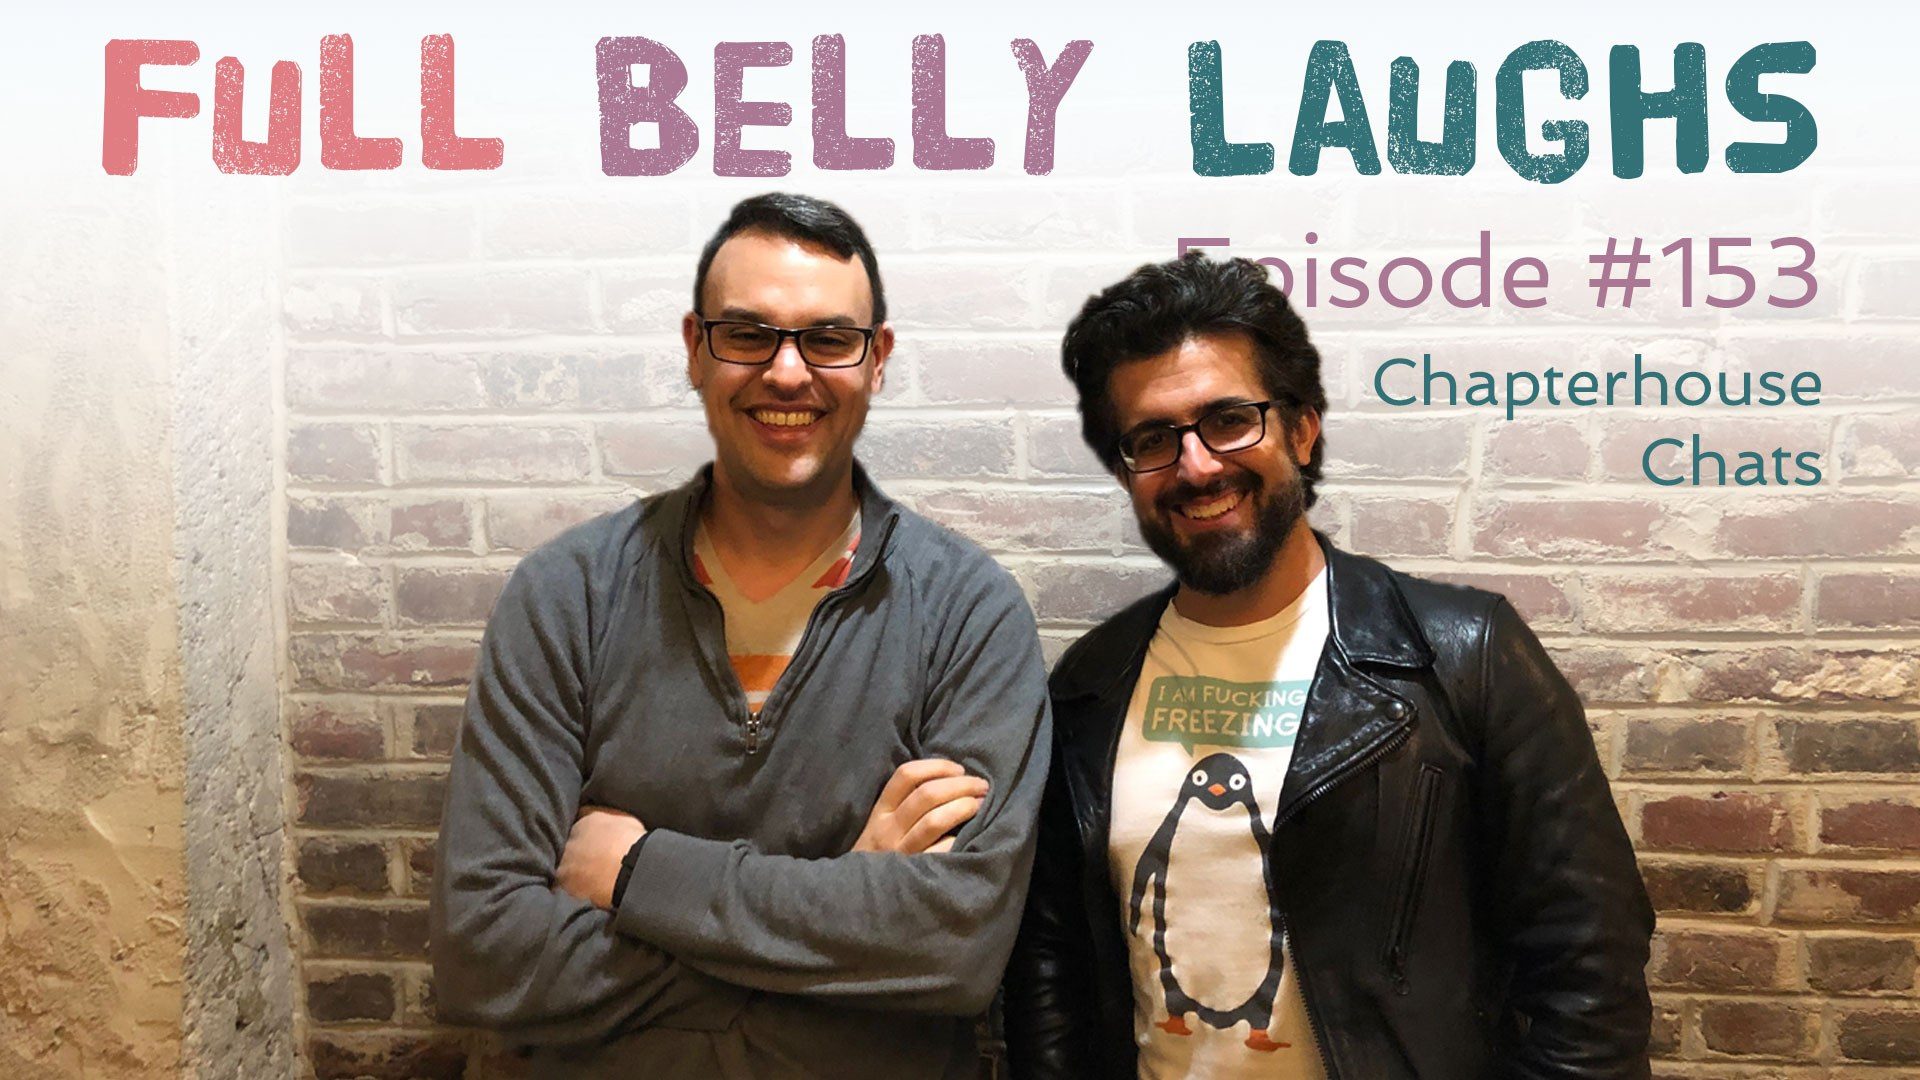 full belly laughs podcast episode 153 john poveromo chapterhouse chats audio artwork